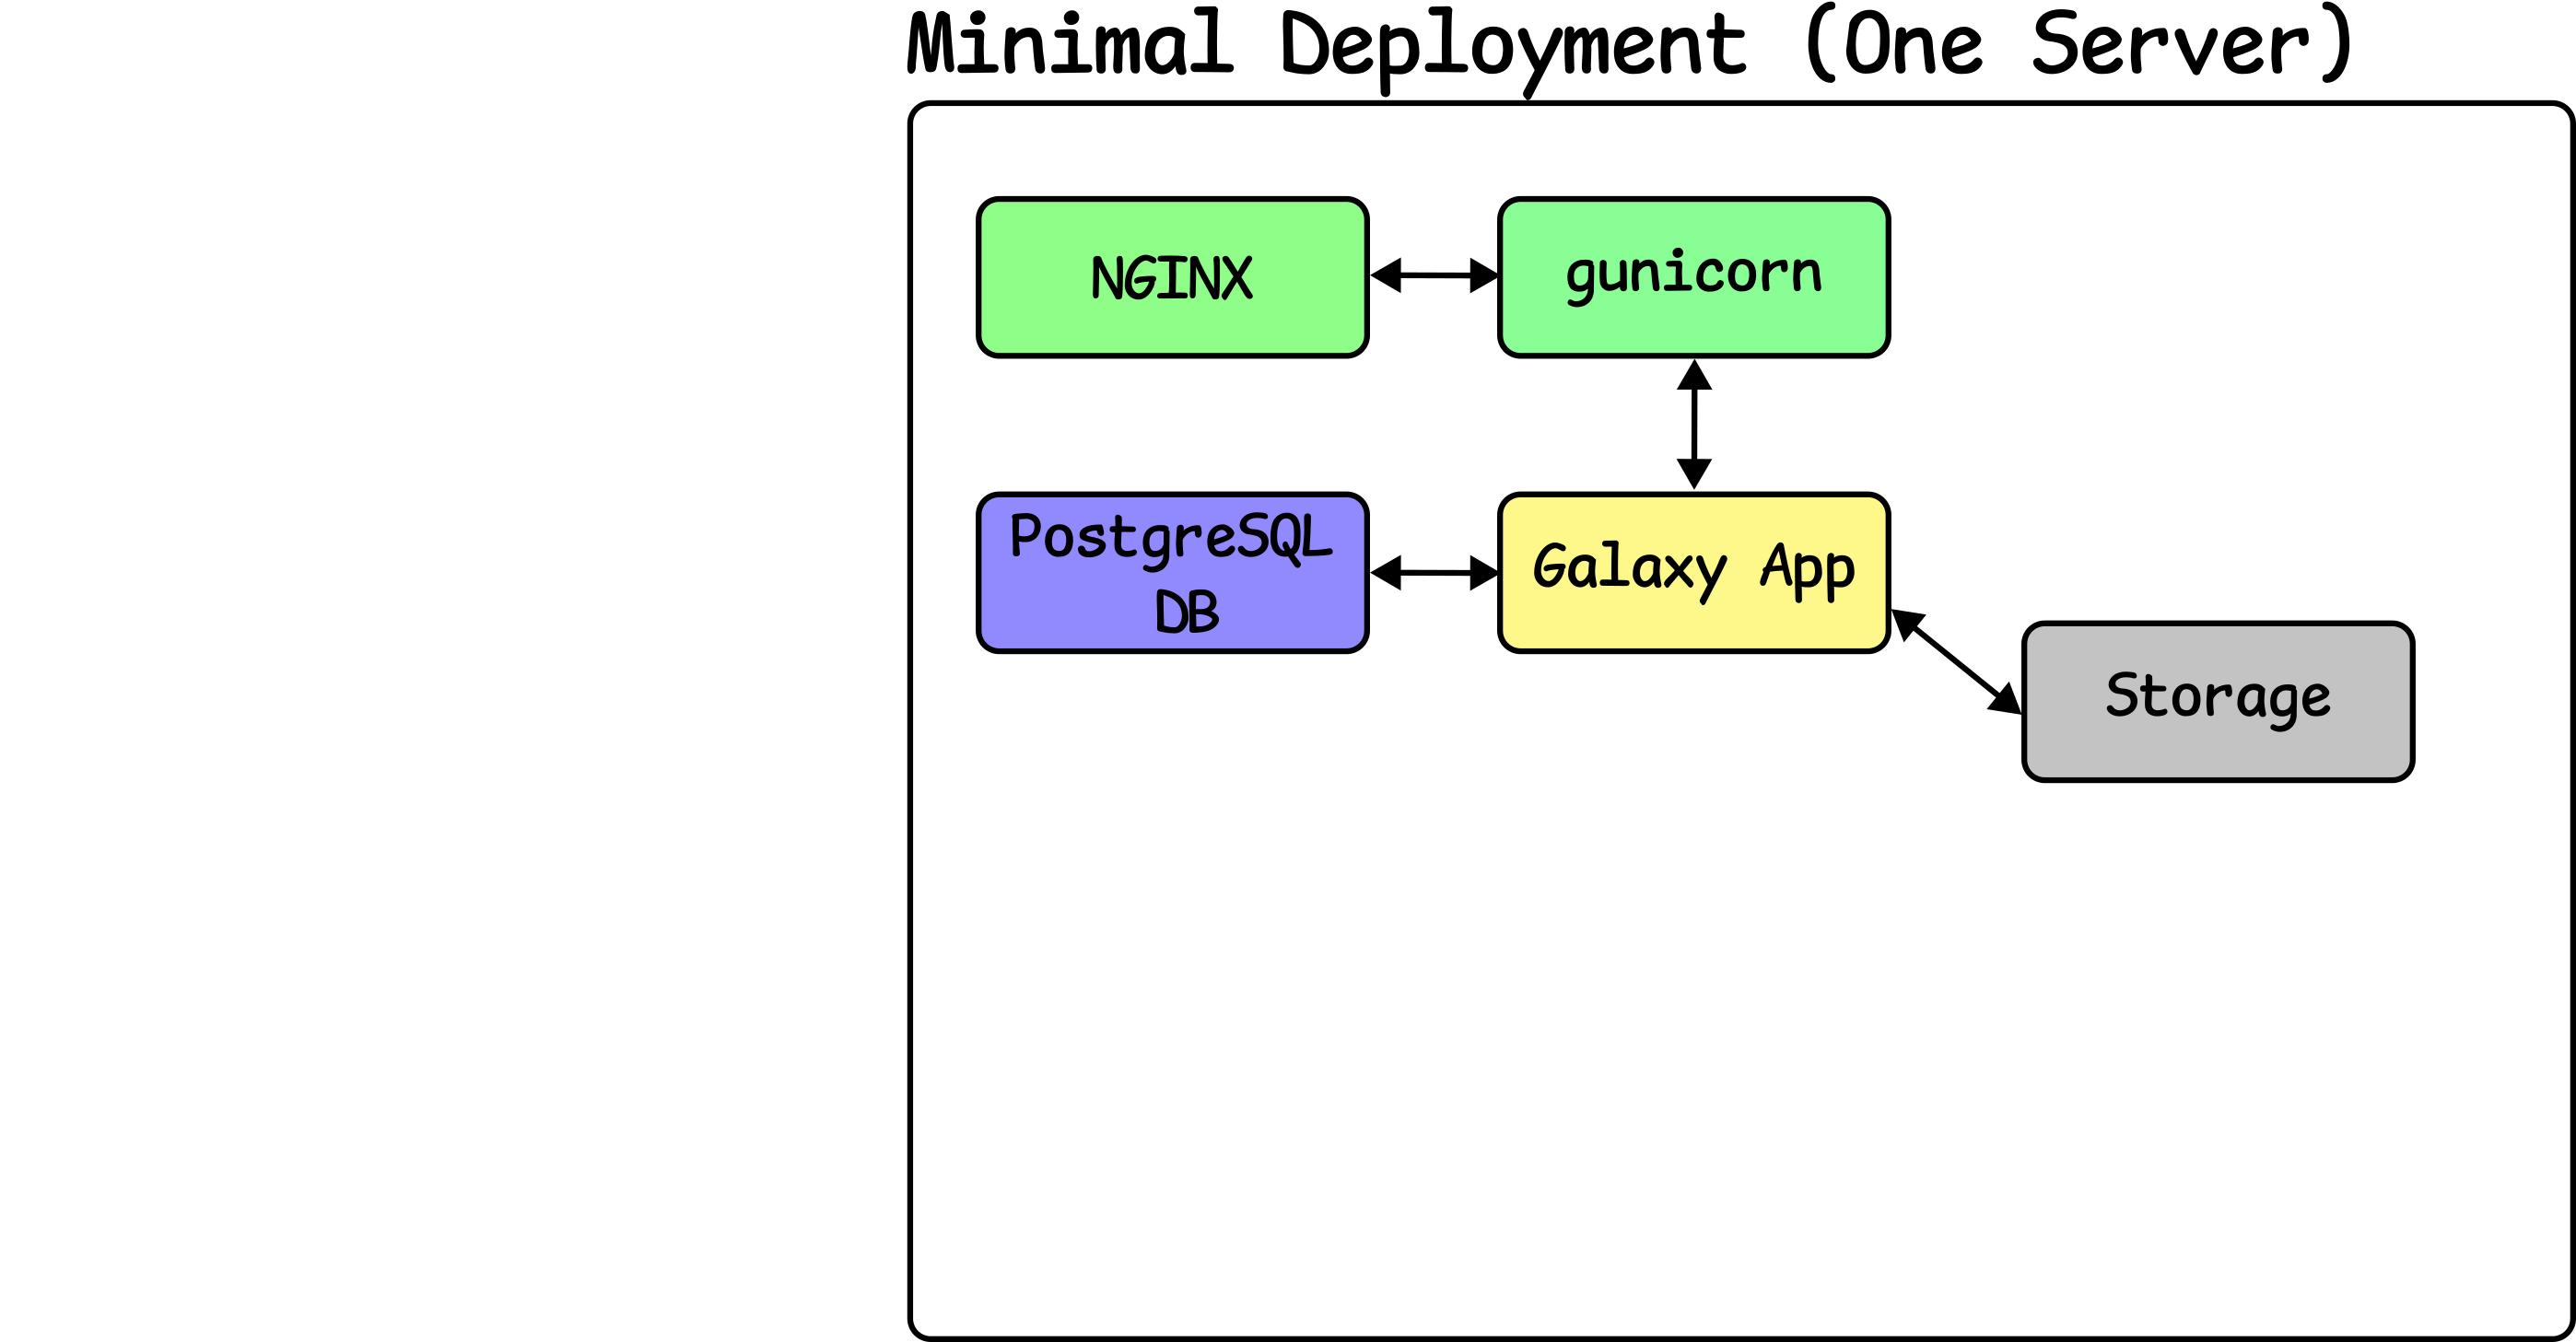 NGINX is added to proxy Gunicorn